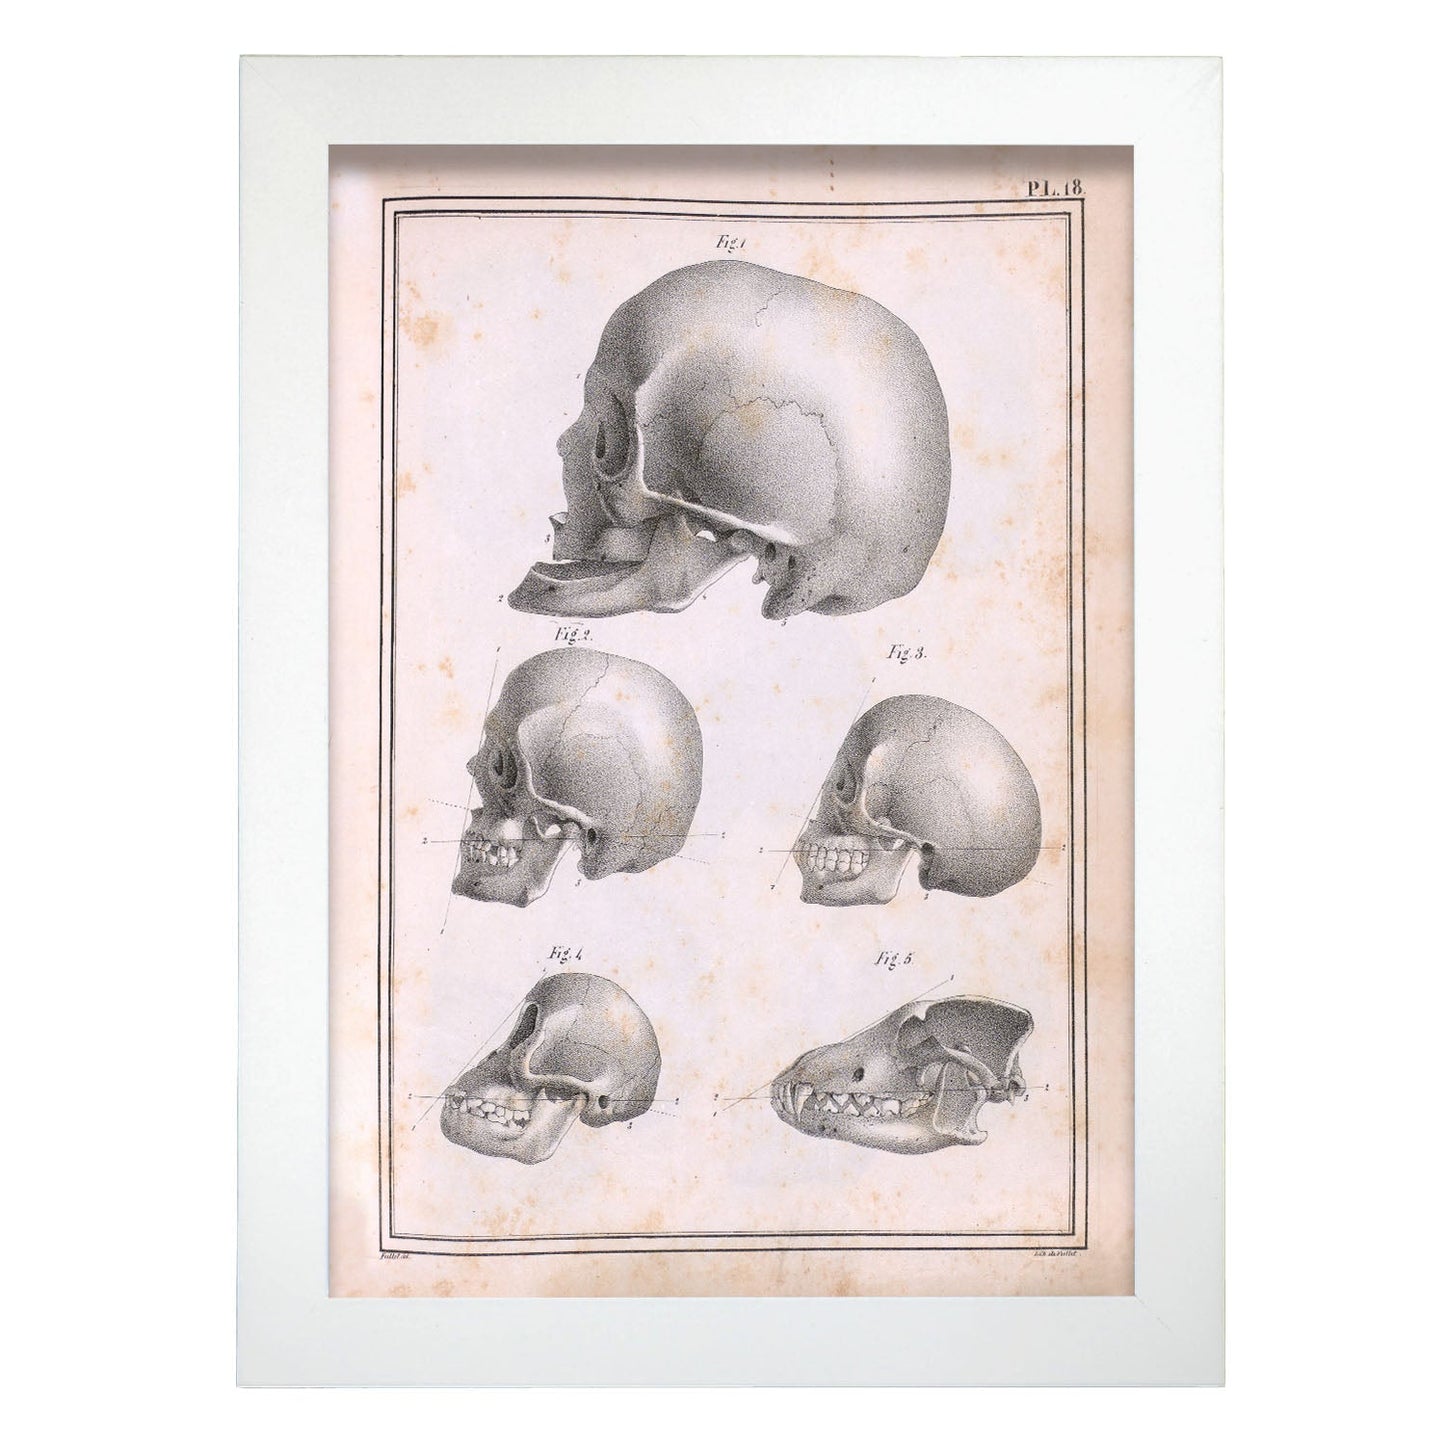 Paillou Skulls; geriatric, caucasiod and negroid adult, orangutan, and dog-Artwork-Nacnic-A4-Marco Blanco-Nacnic Estudio SL